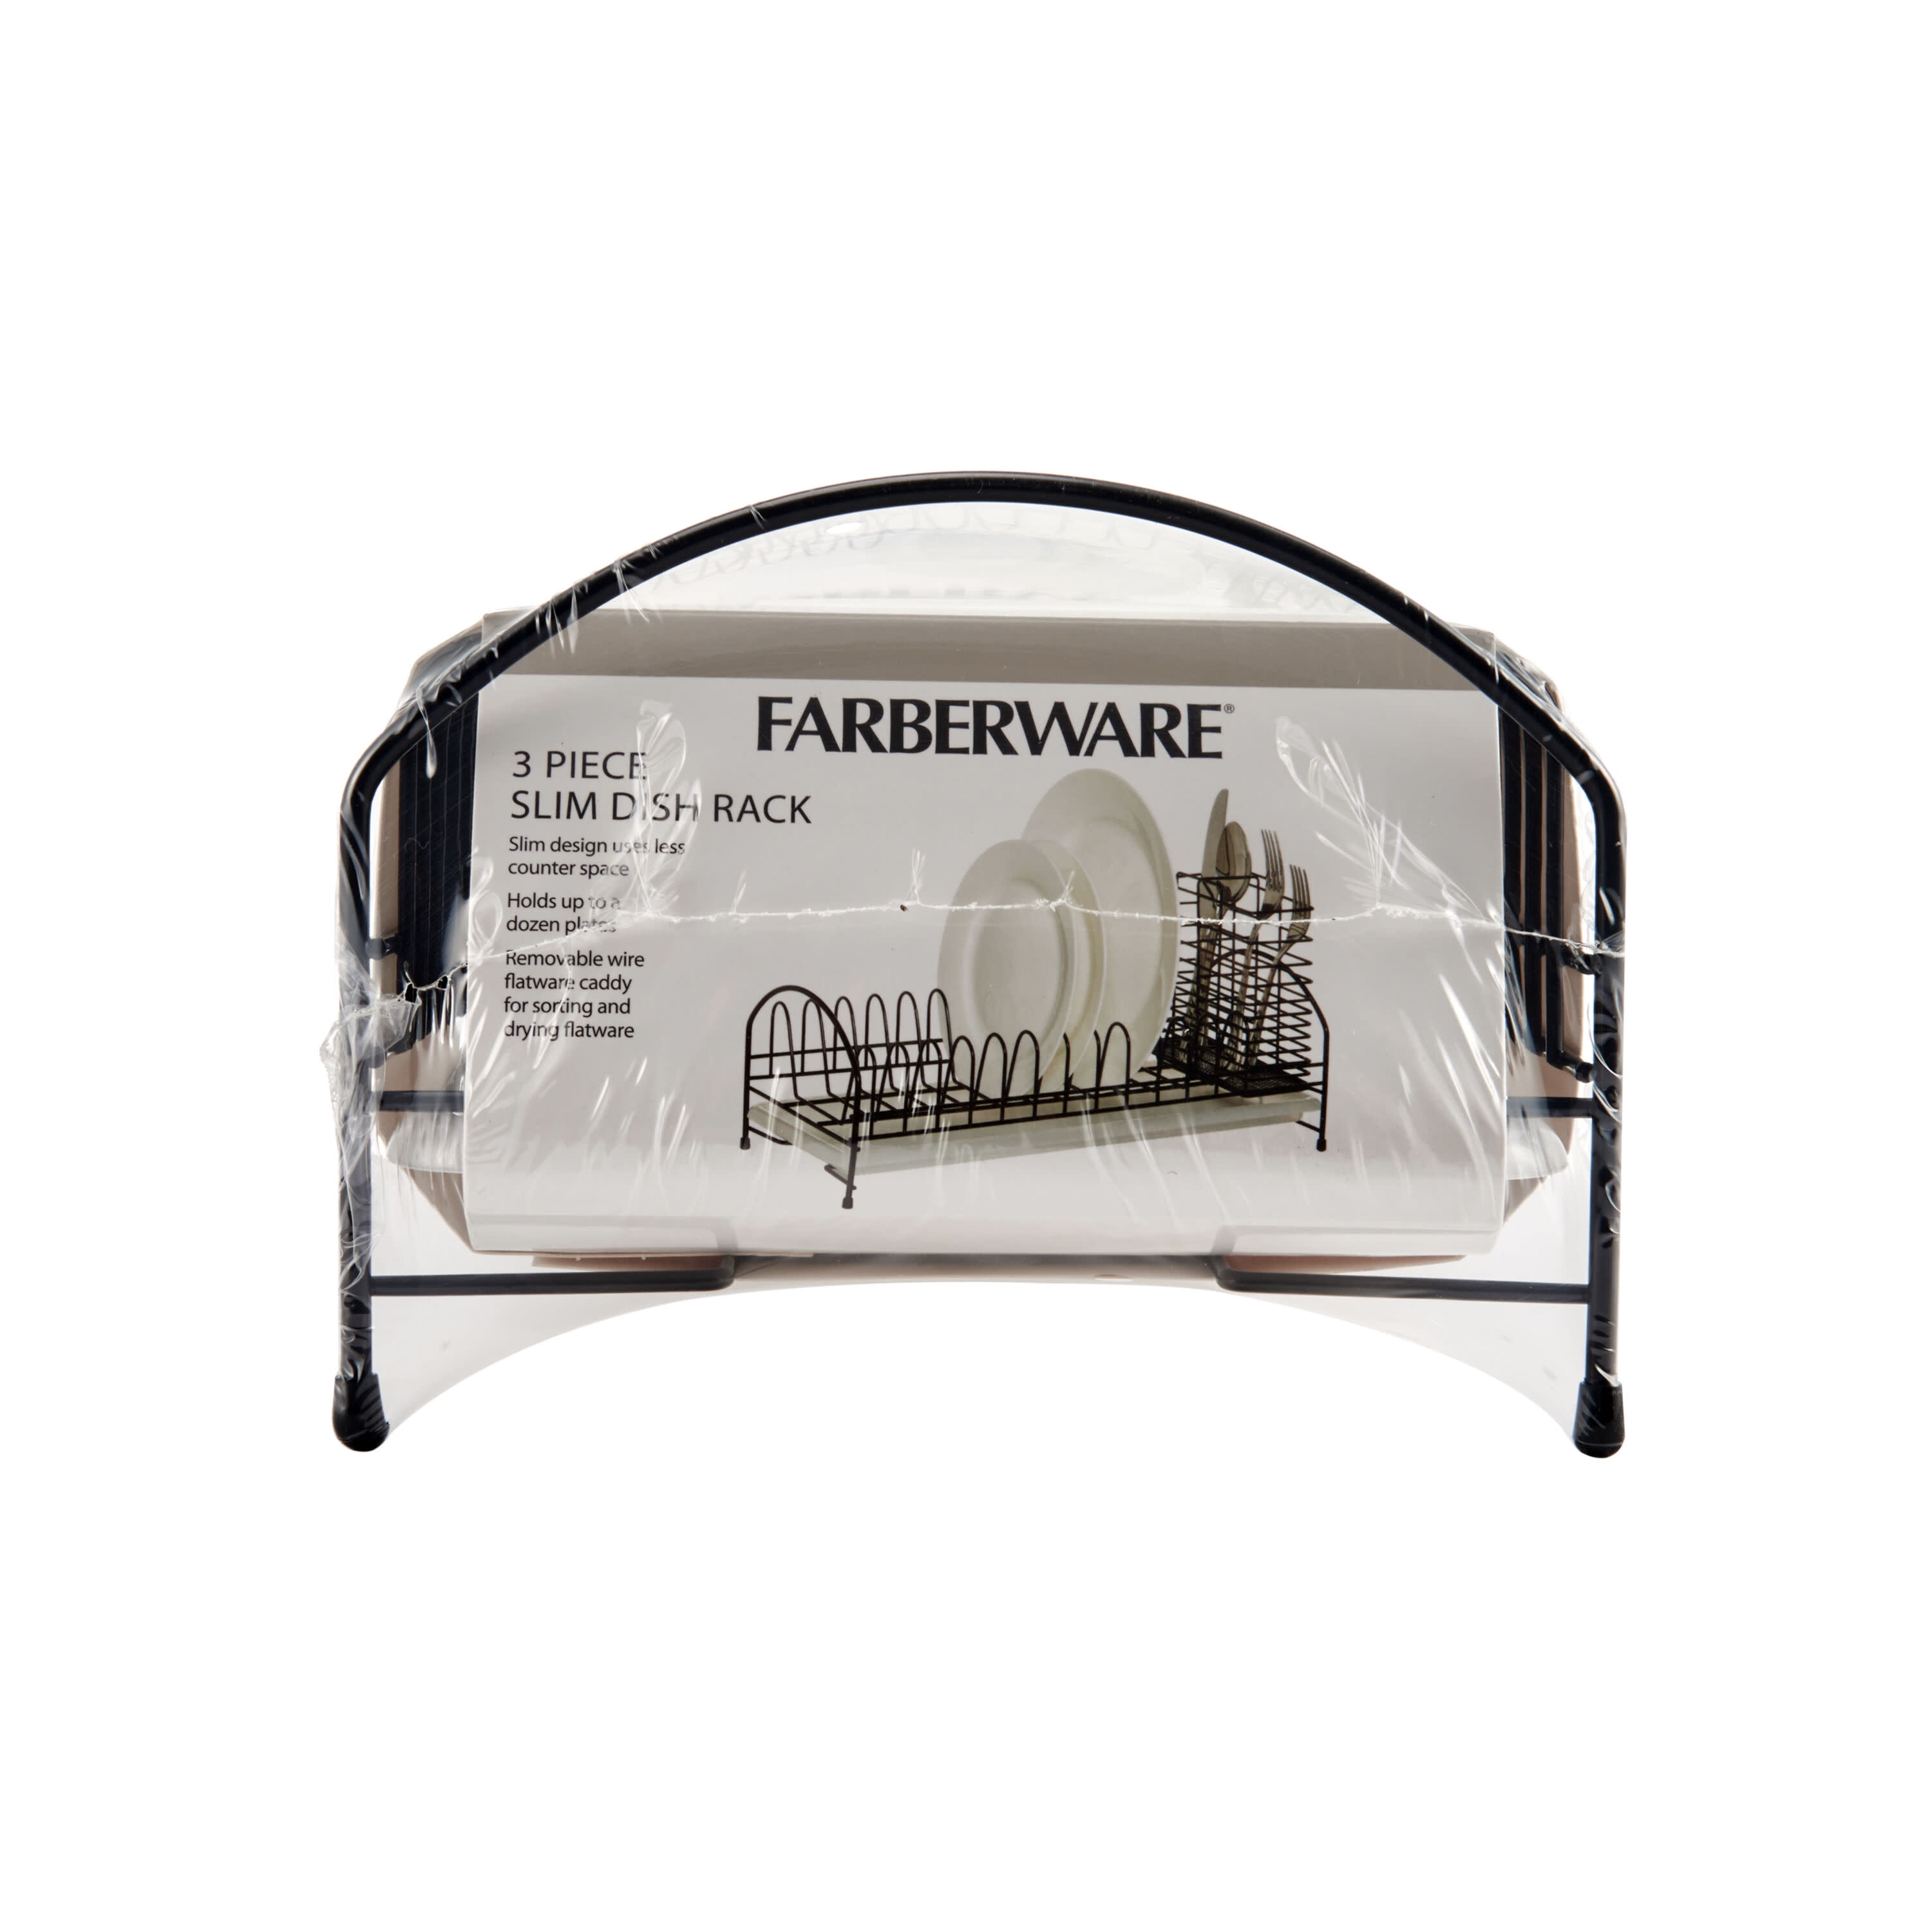 Farberware Classic Full Dishrack, 3-Piece, Gray